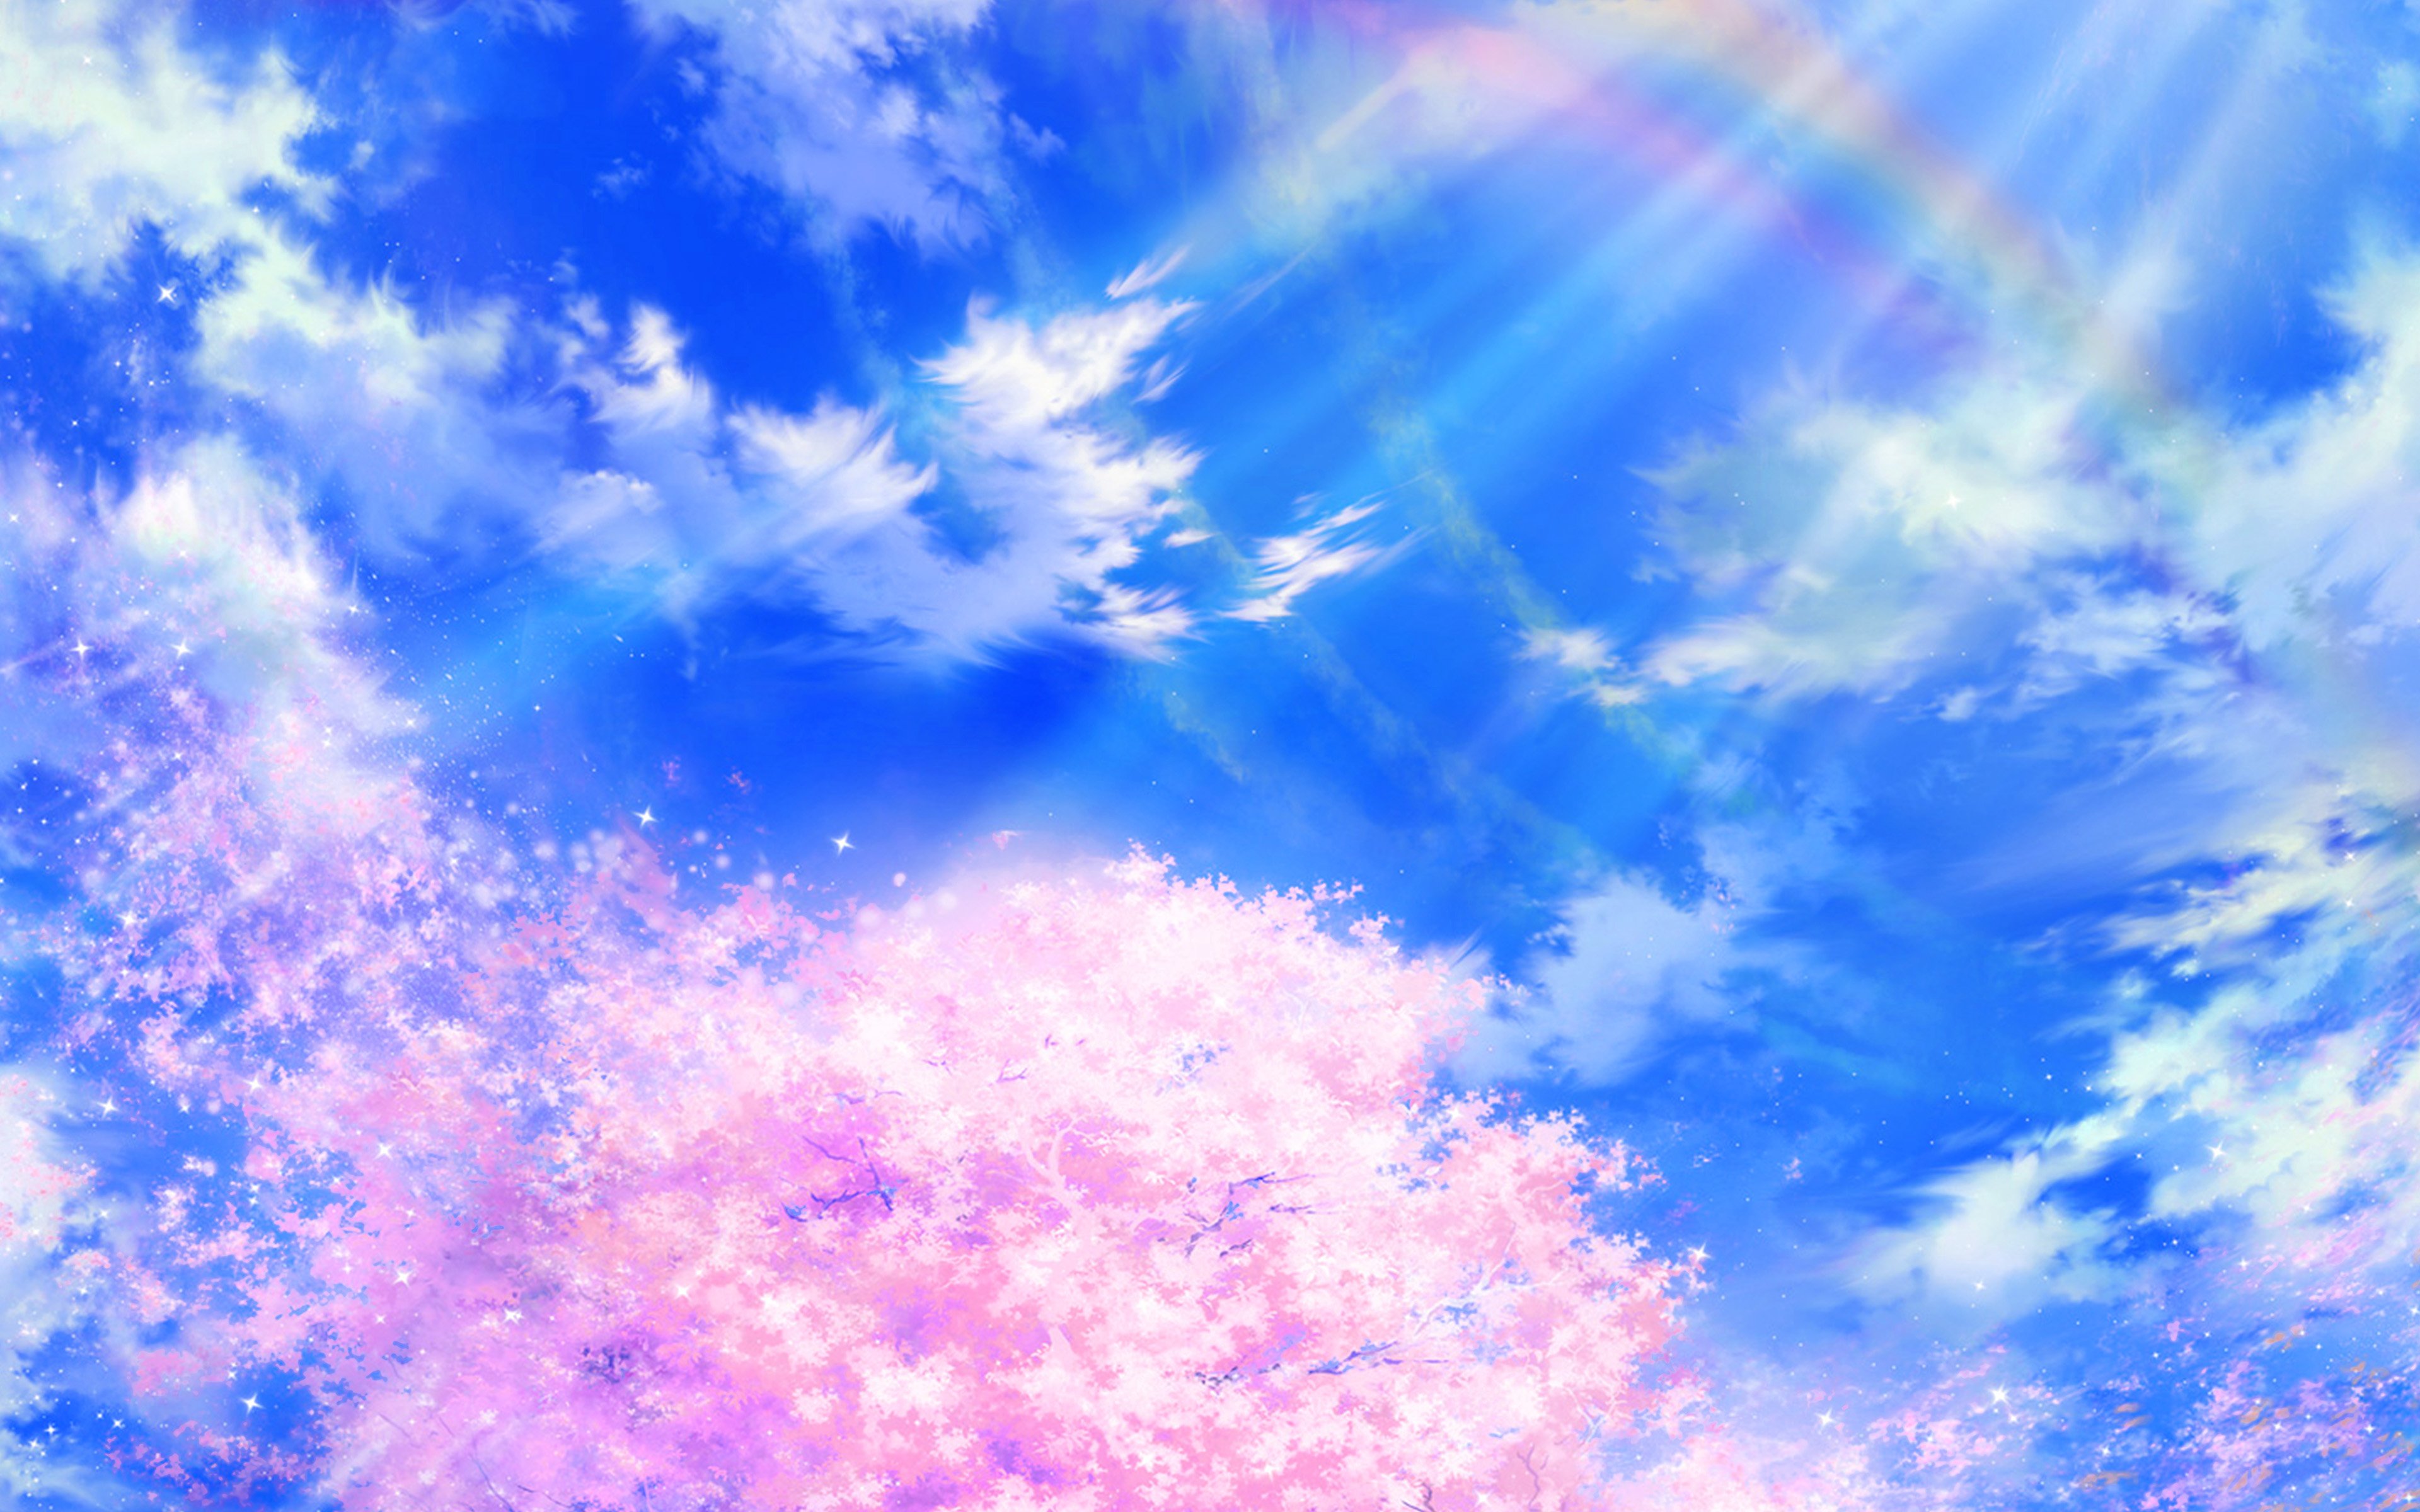 Anime spring | Scenery wallpaper, Anime scenery wallpaper, Phone wallpaper